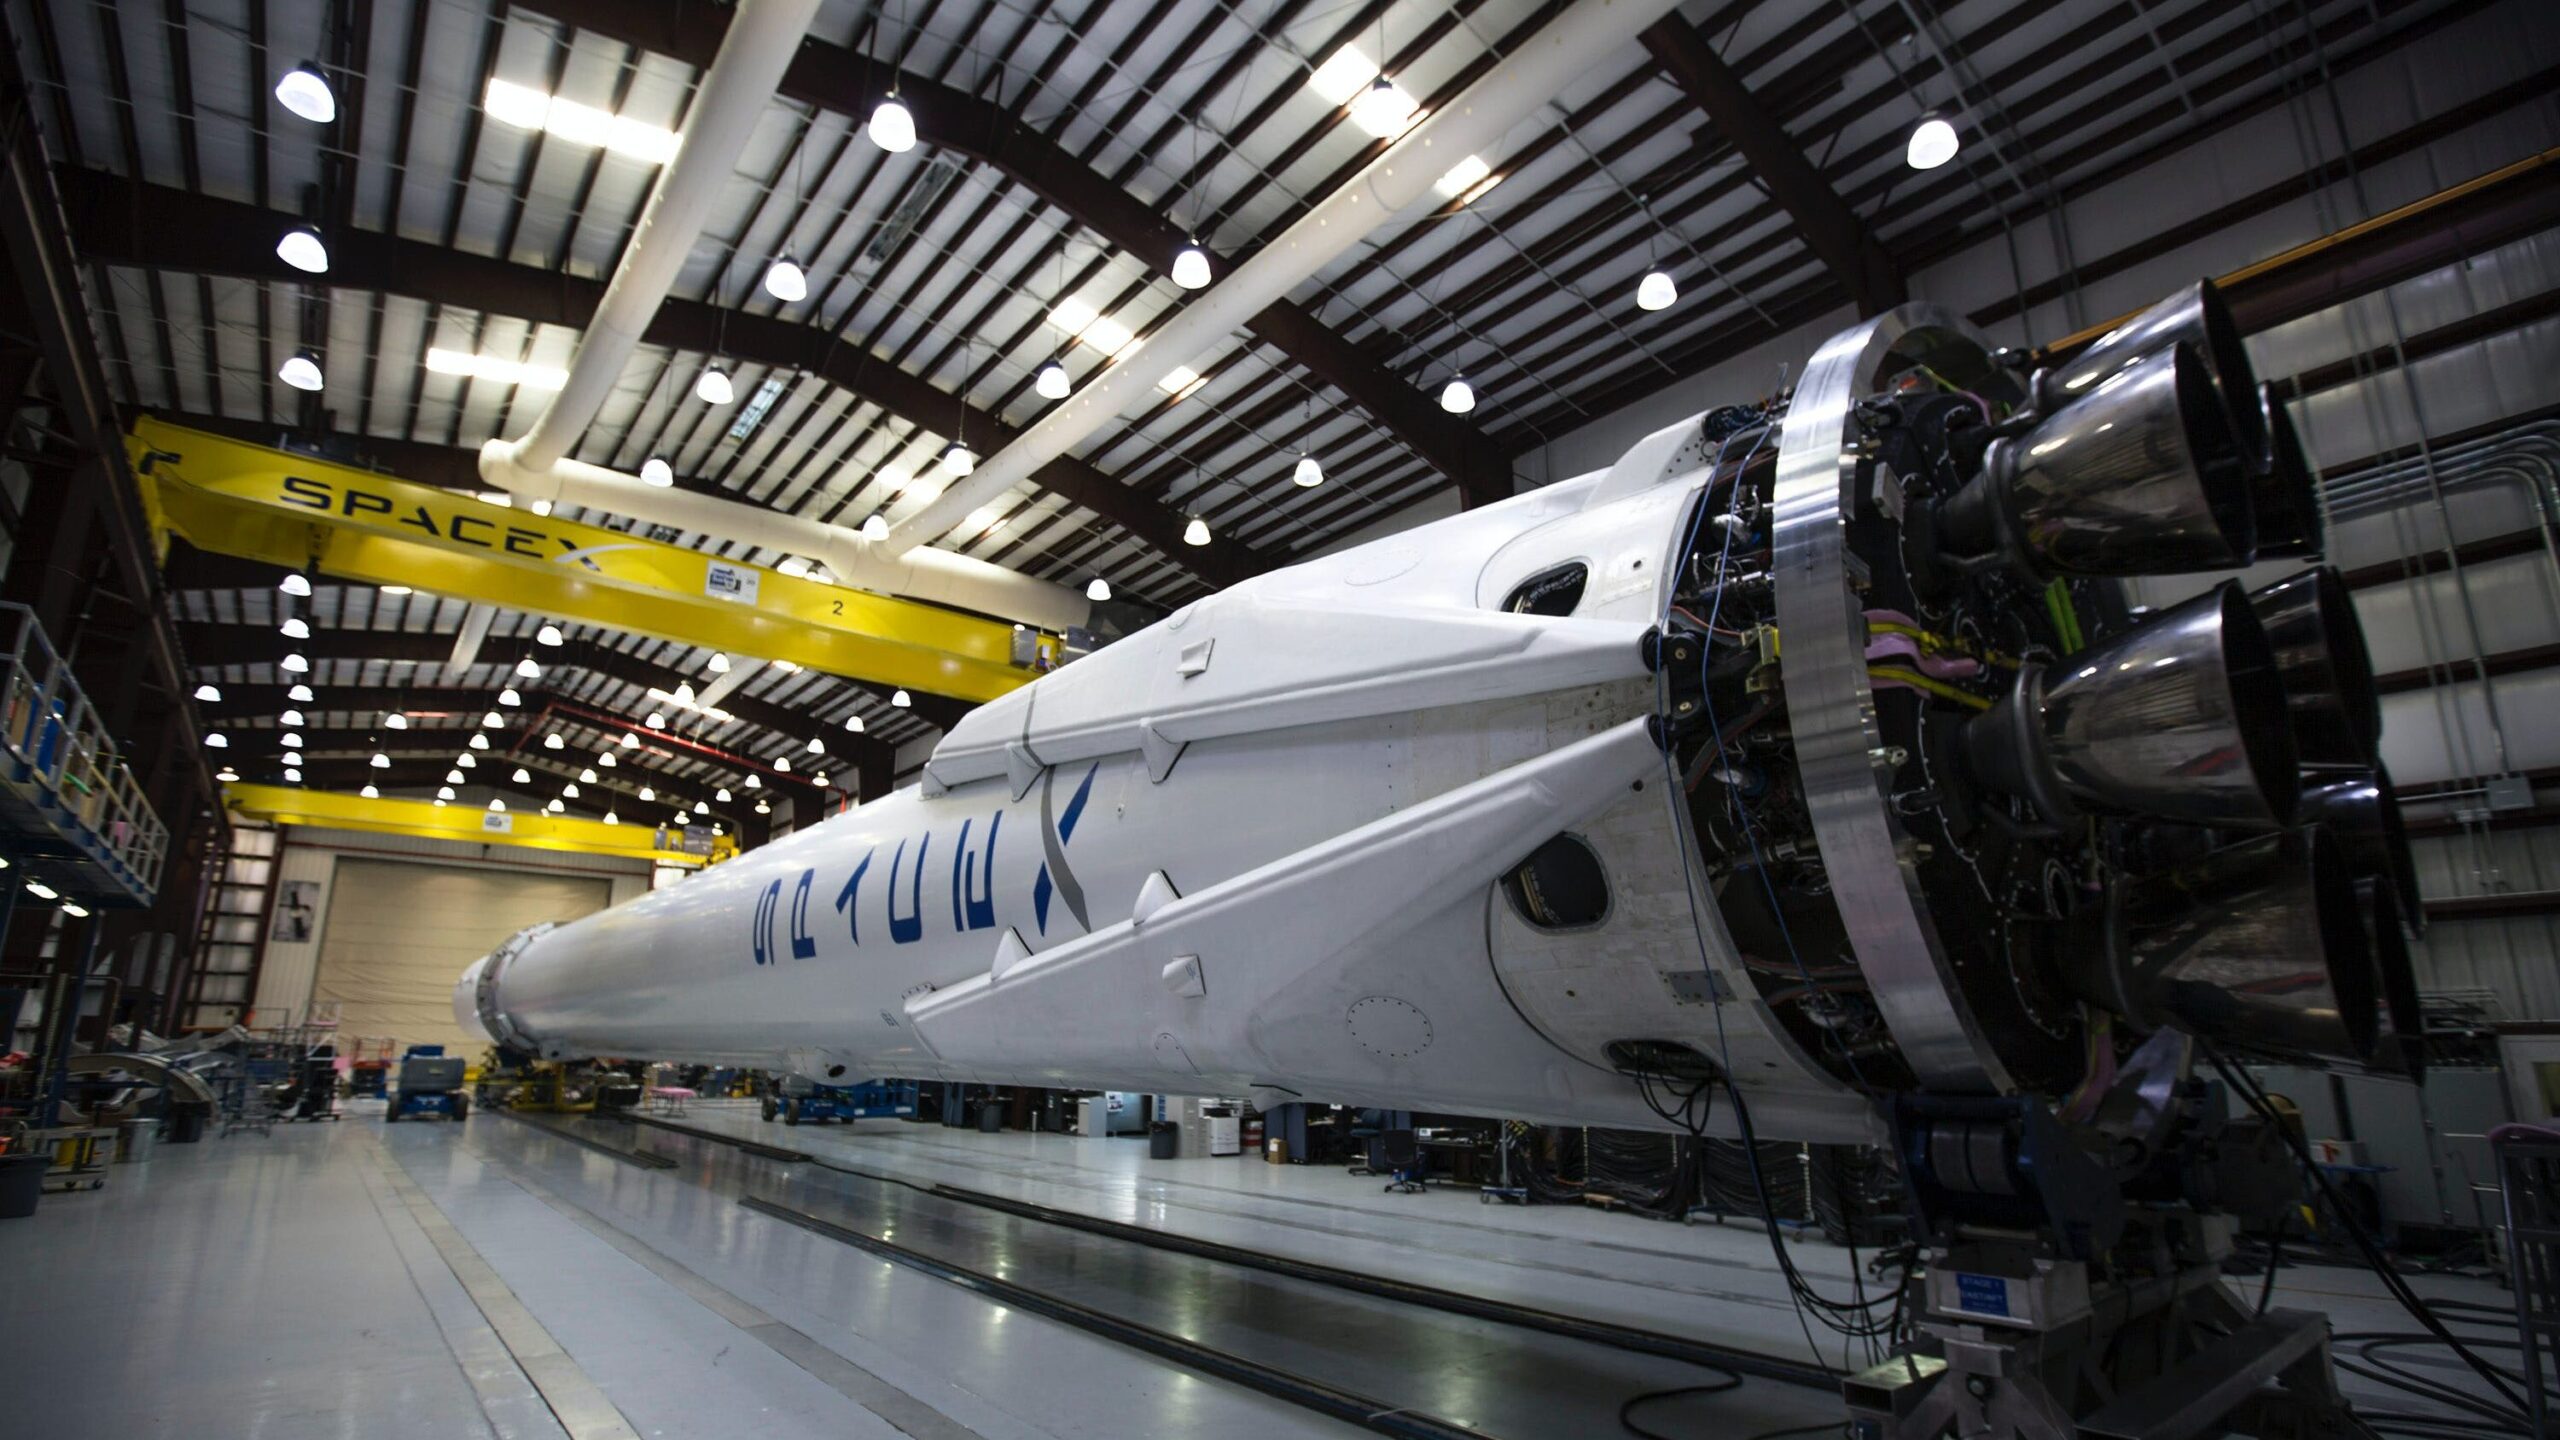 Starship SpaceX Rocket